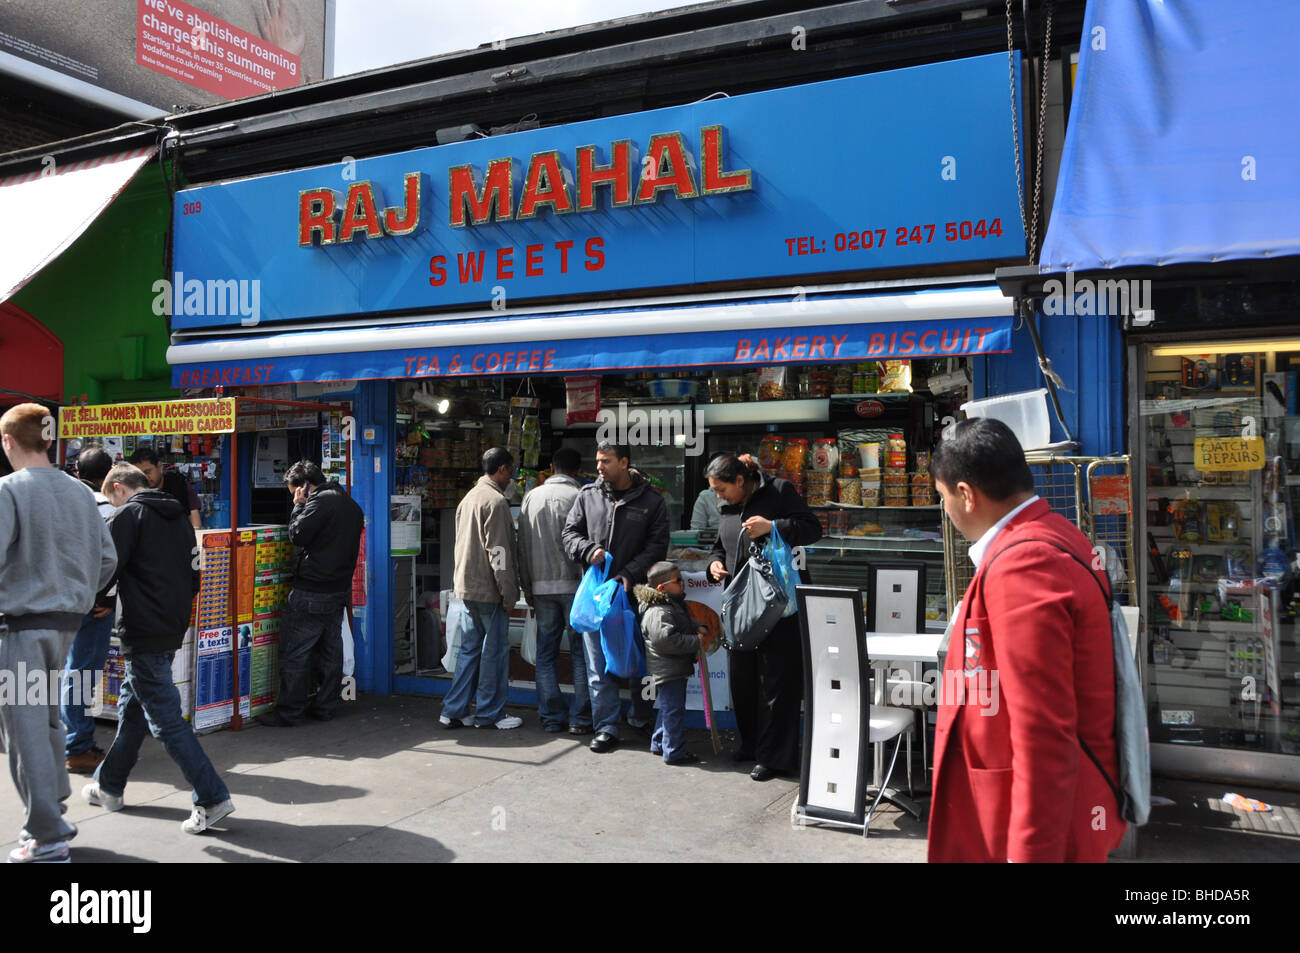 Raj Mahal. Sweet Shop in Whitechapel  in London UK Stock Photo